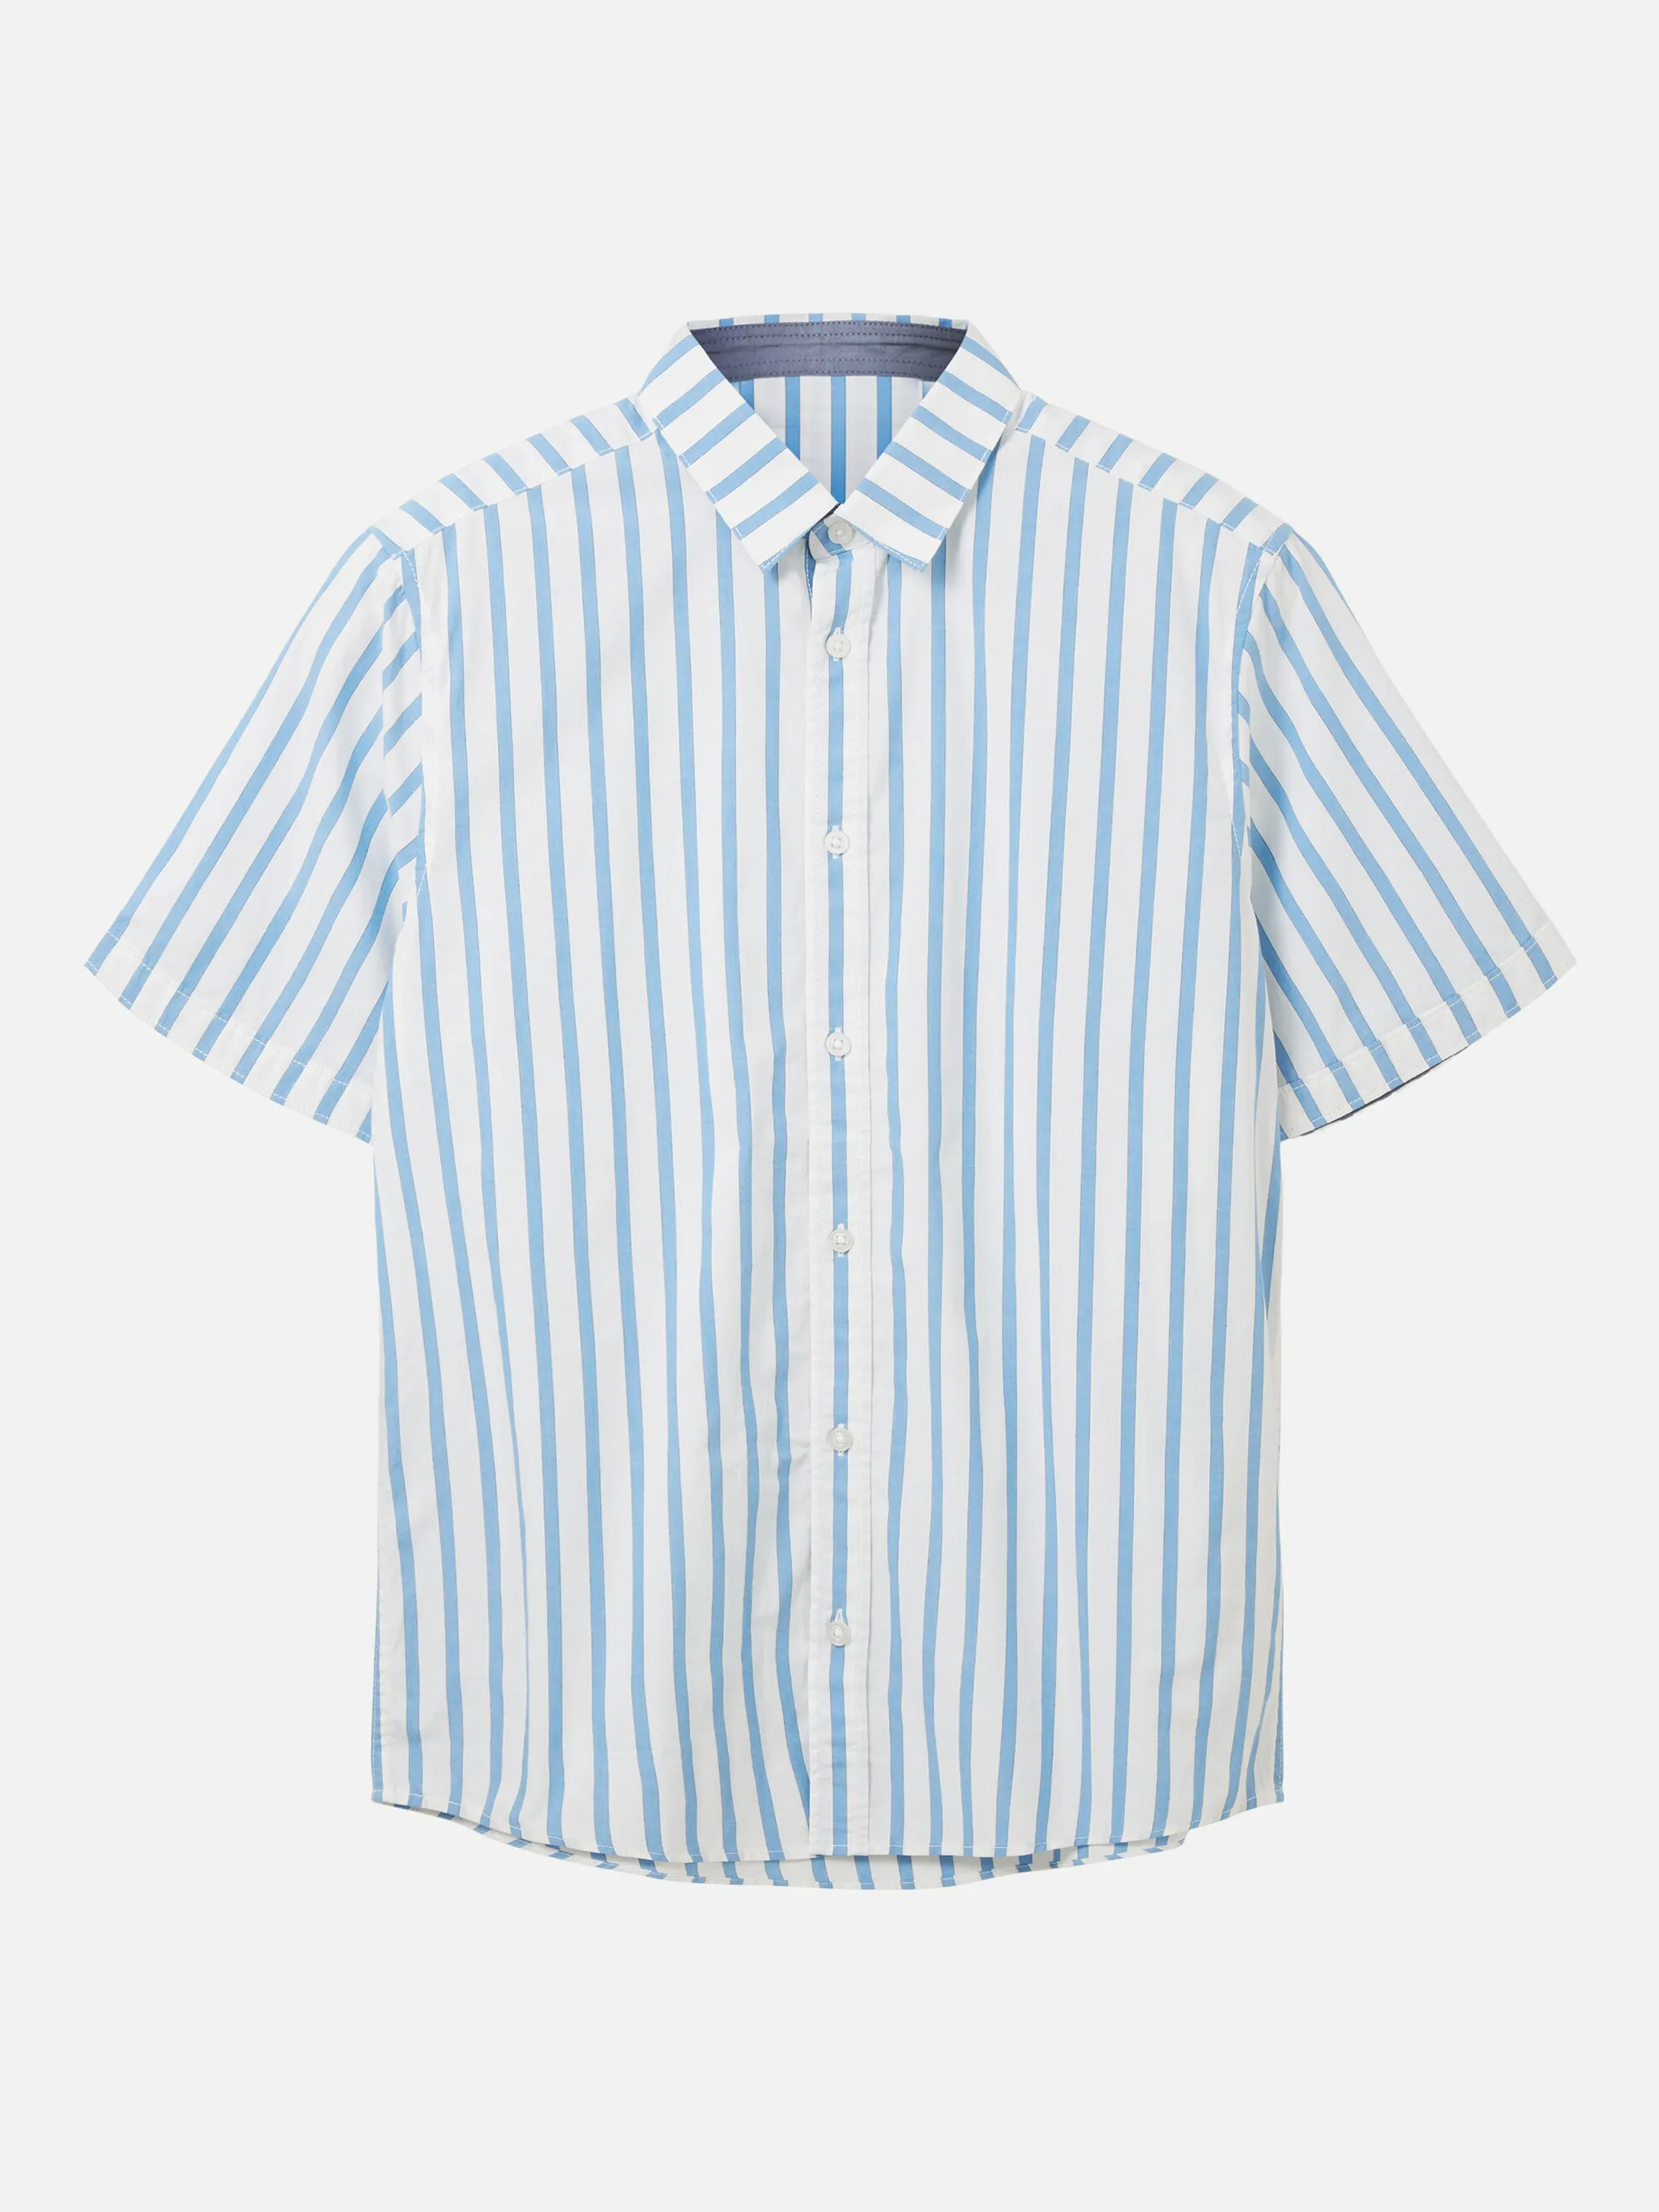 Tom Tailor 1037282 striped shirt Blau 880533 31789 1